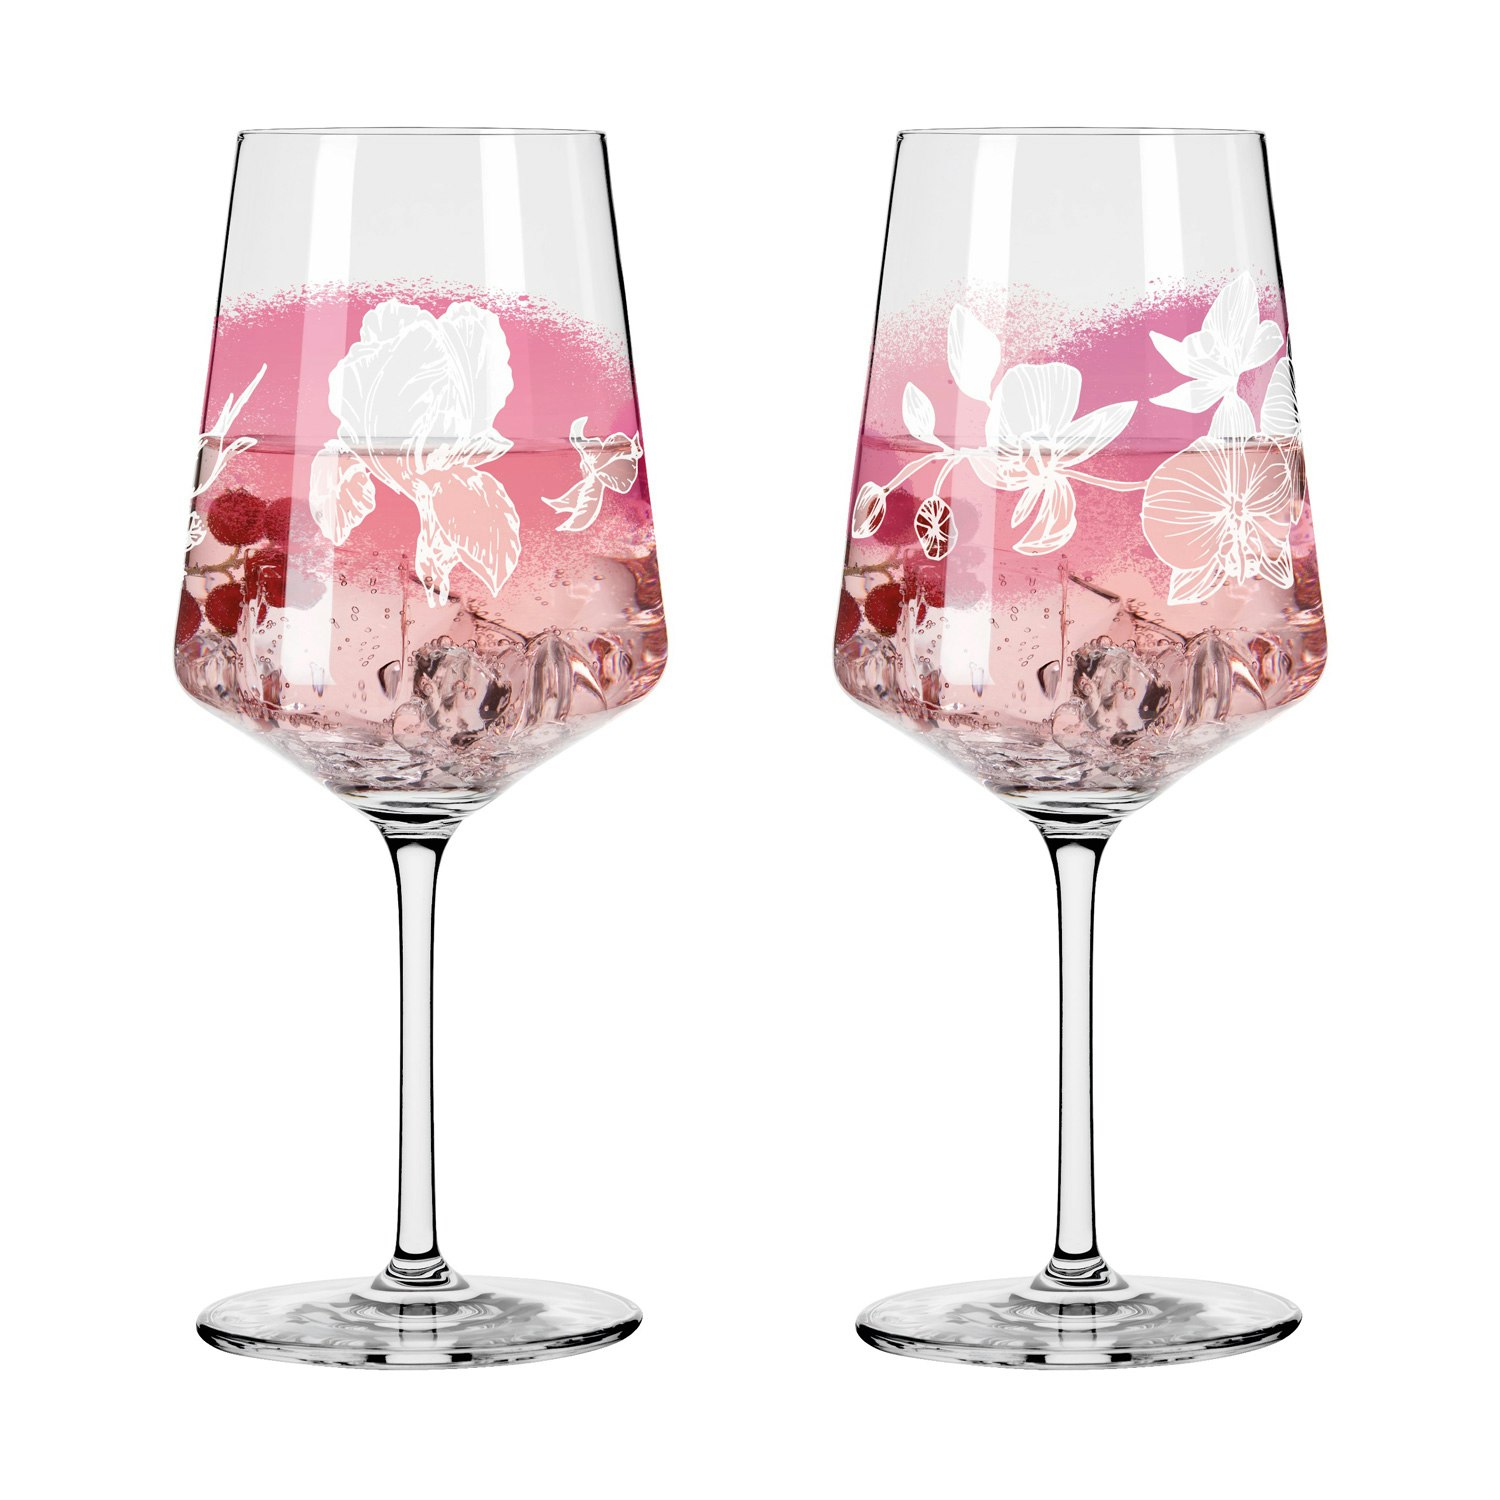 Sommersonett Wine Glass 2-pack, NO: - Ritzenhoff 3 @ RoyalDesign